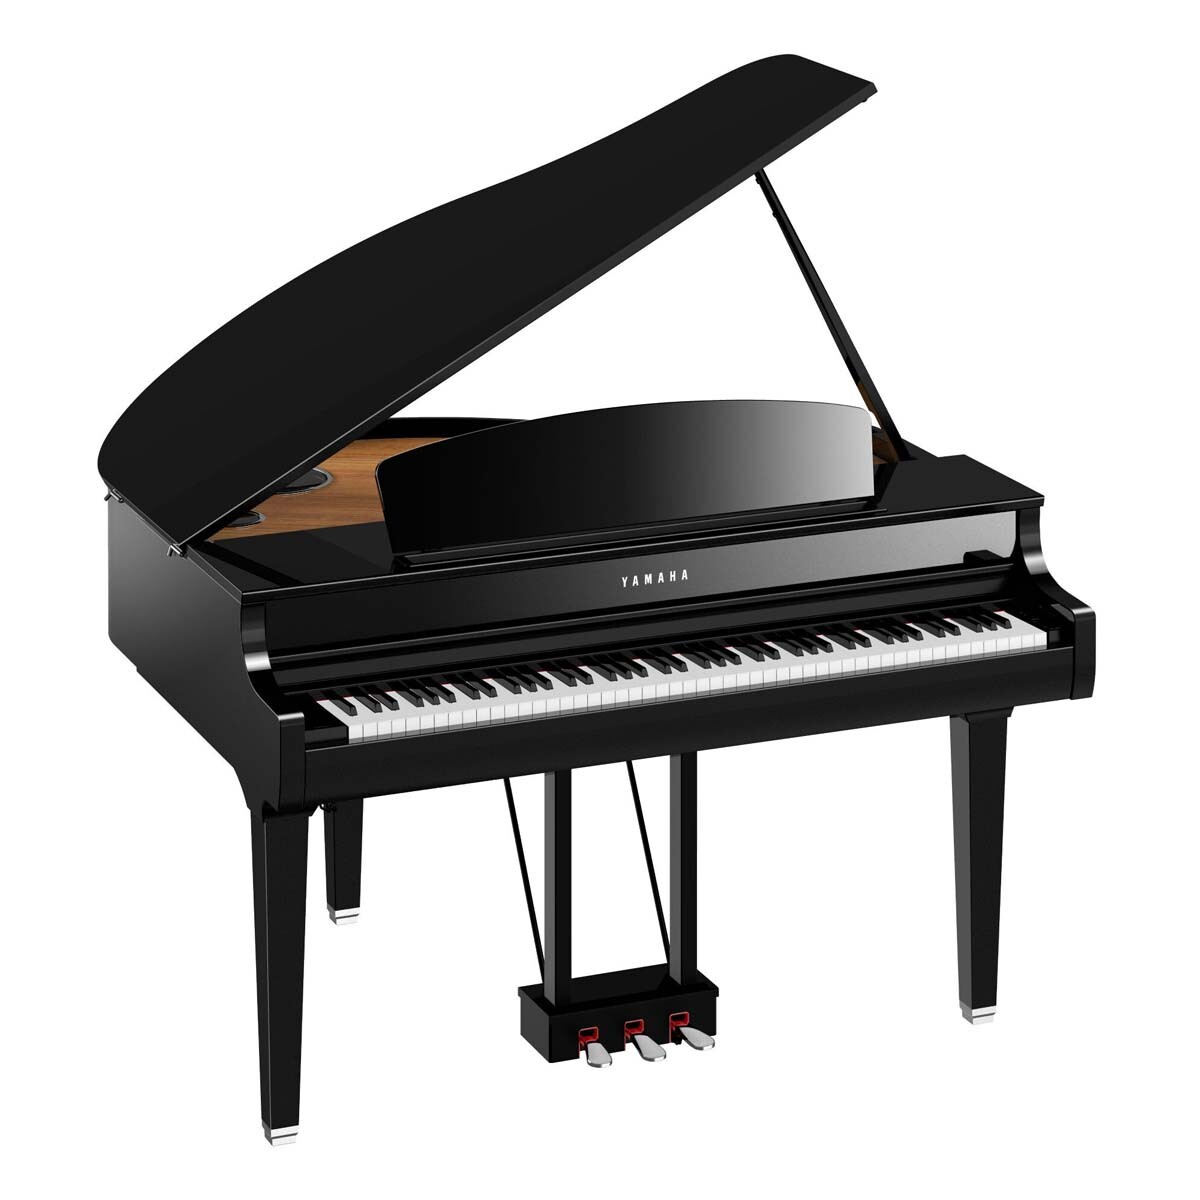 Piano Digital Yamaha Clp795gp 